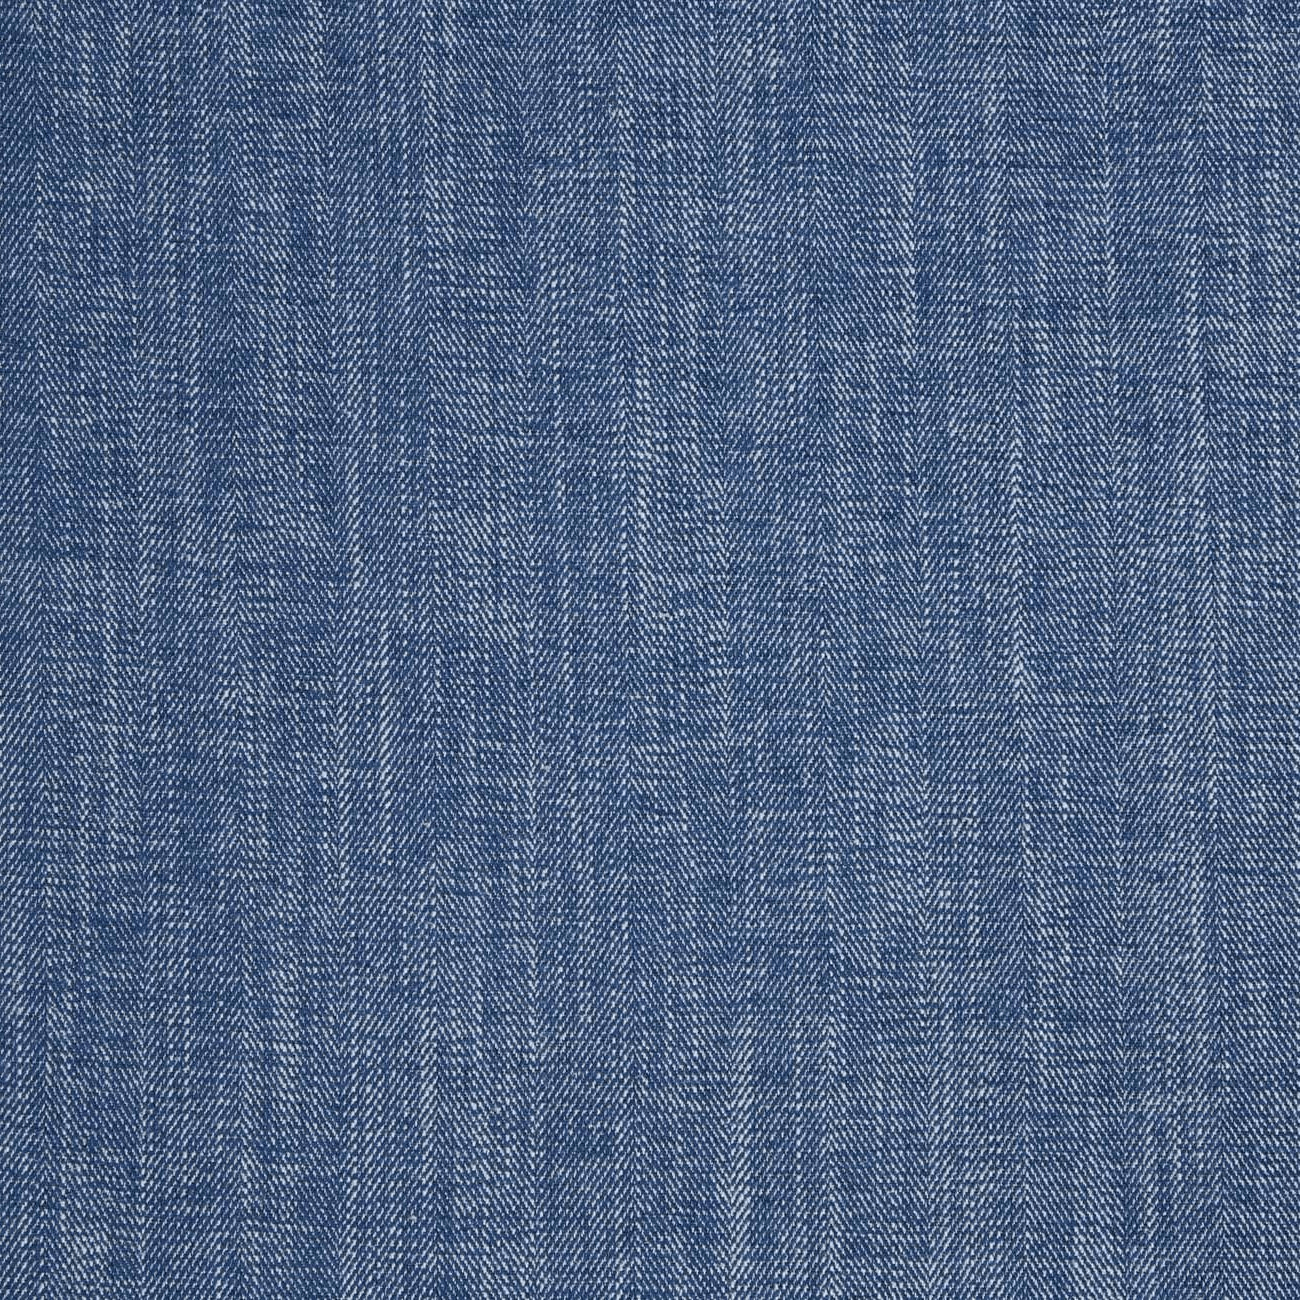 Detailed Texture Of Denim Fabric